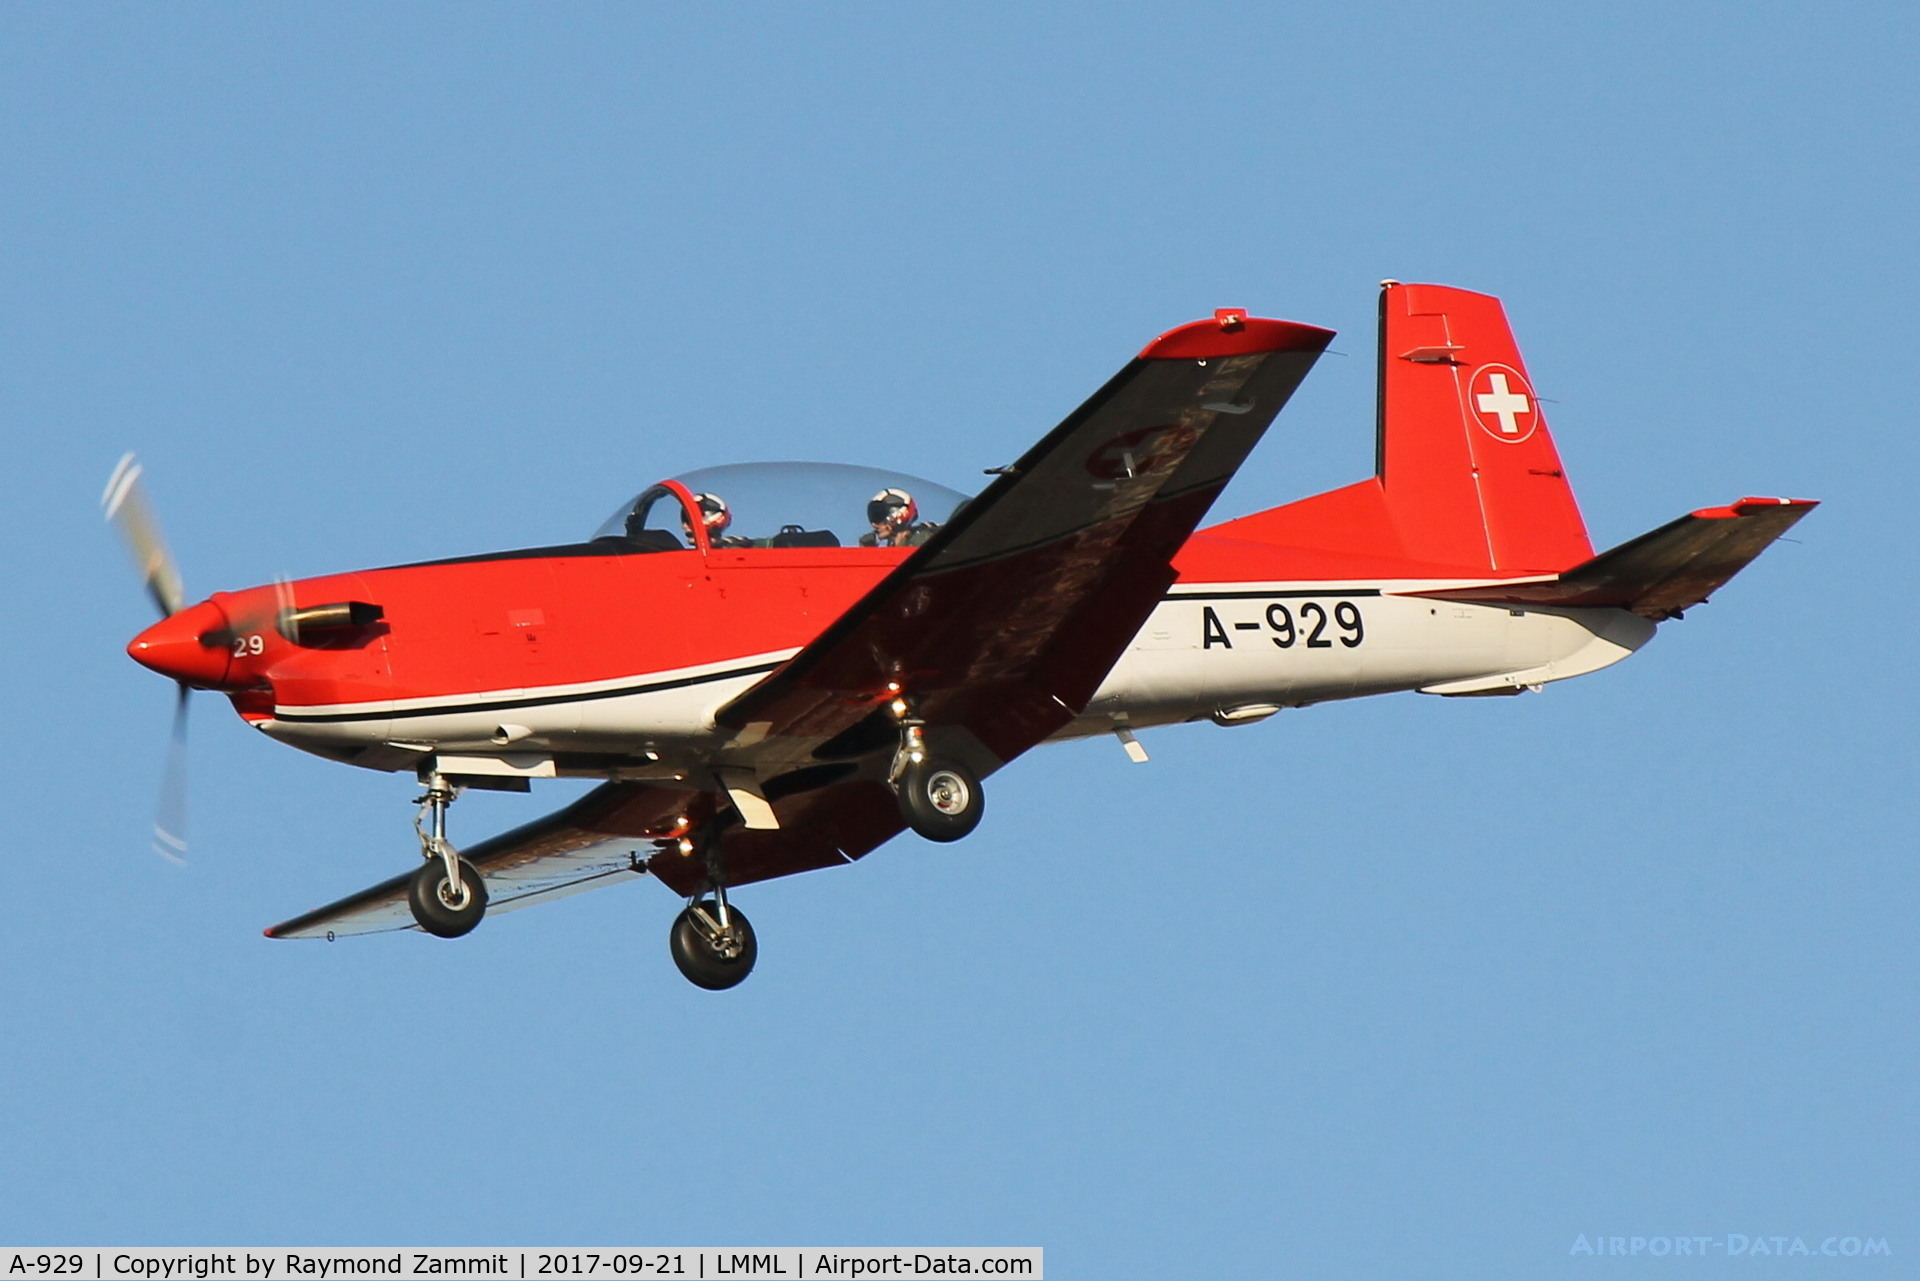 A-929, 1983 Pilatus PC-7 Turbo Trainer C/N 337, Pilatus PC-7 A-929 Swiss Air Force